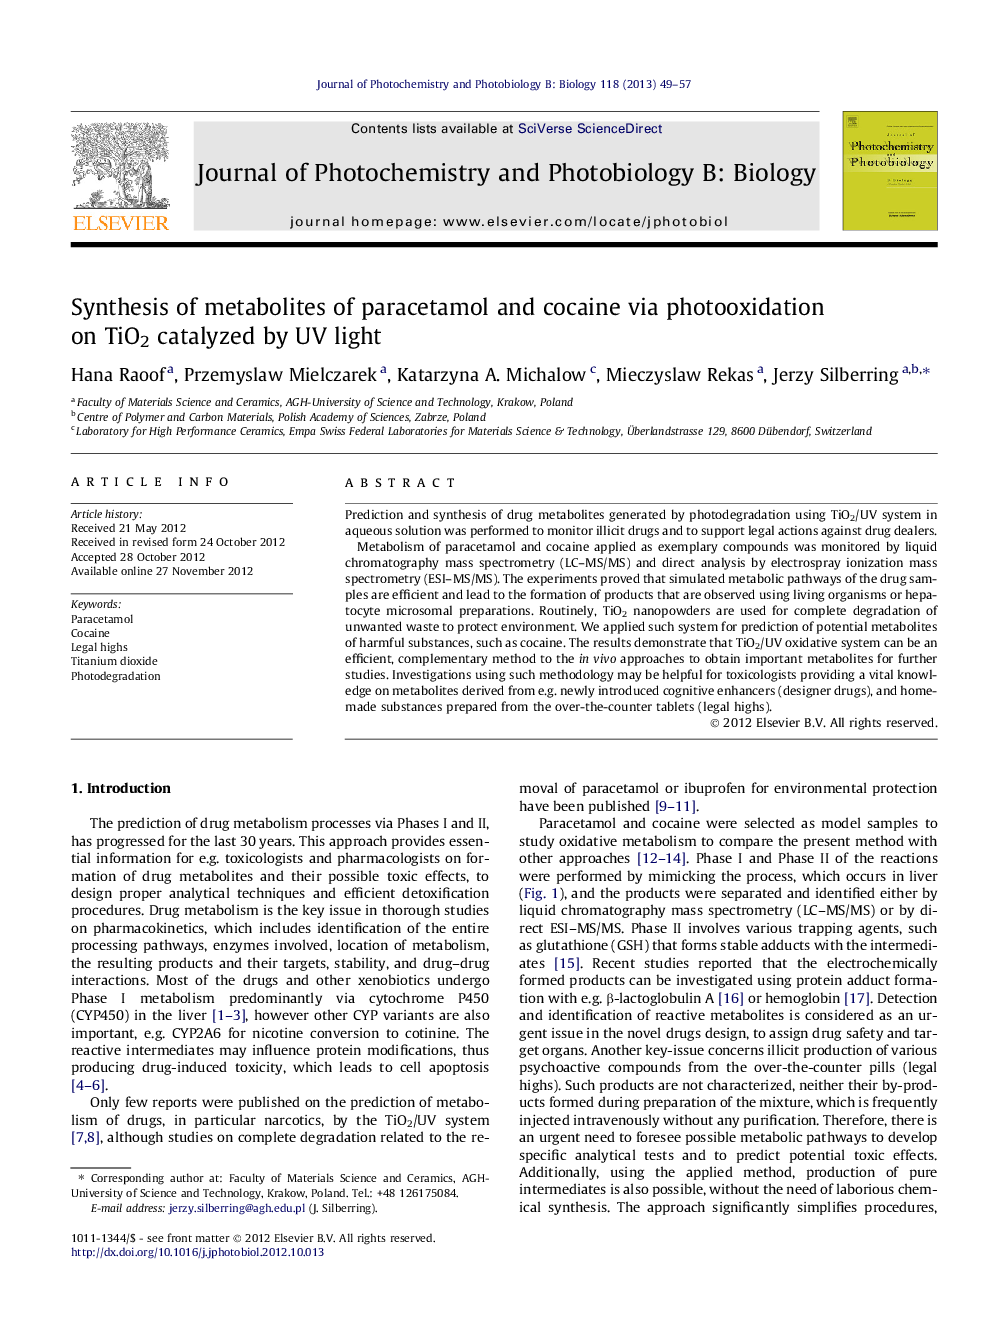 Synthesis of metabolites of paracetamol and cocaine via photooxidation on TiO2 catalyzed by UV light